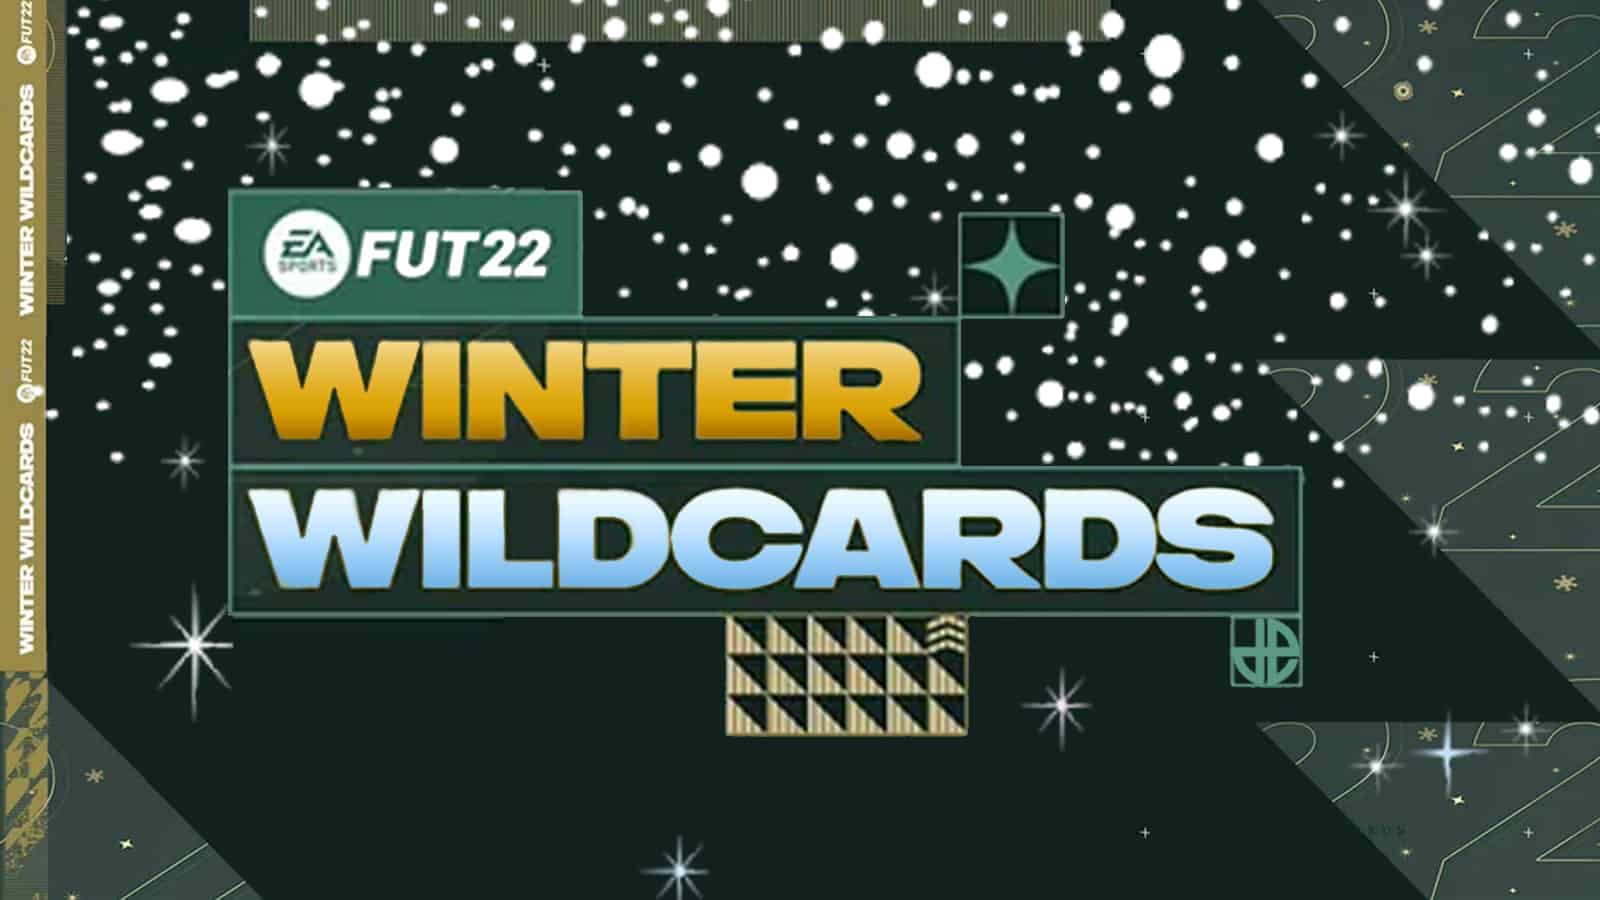 FUT 22 Winter Wildcards loading screen.